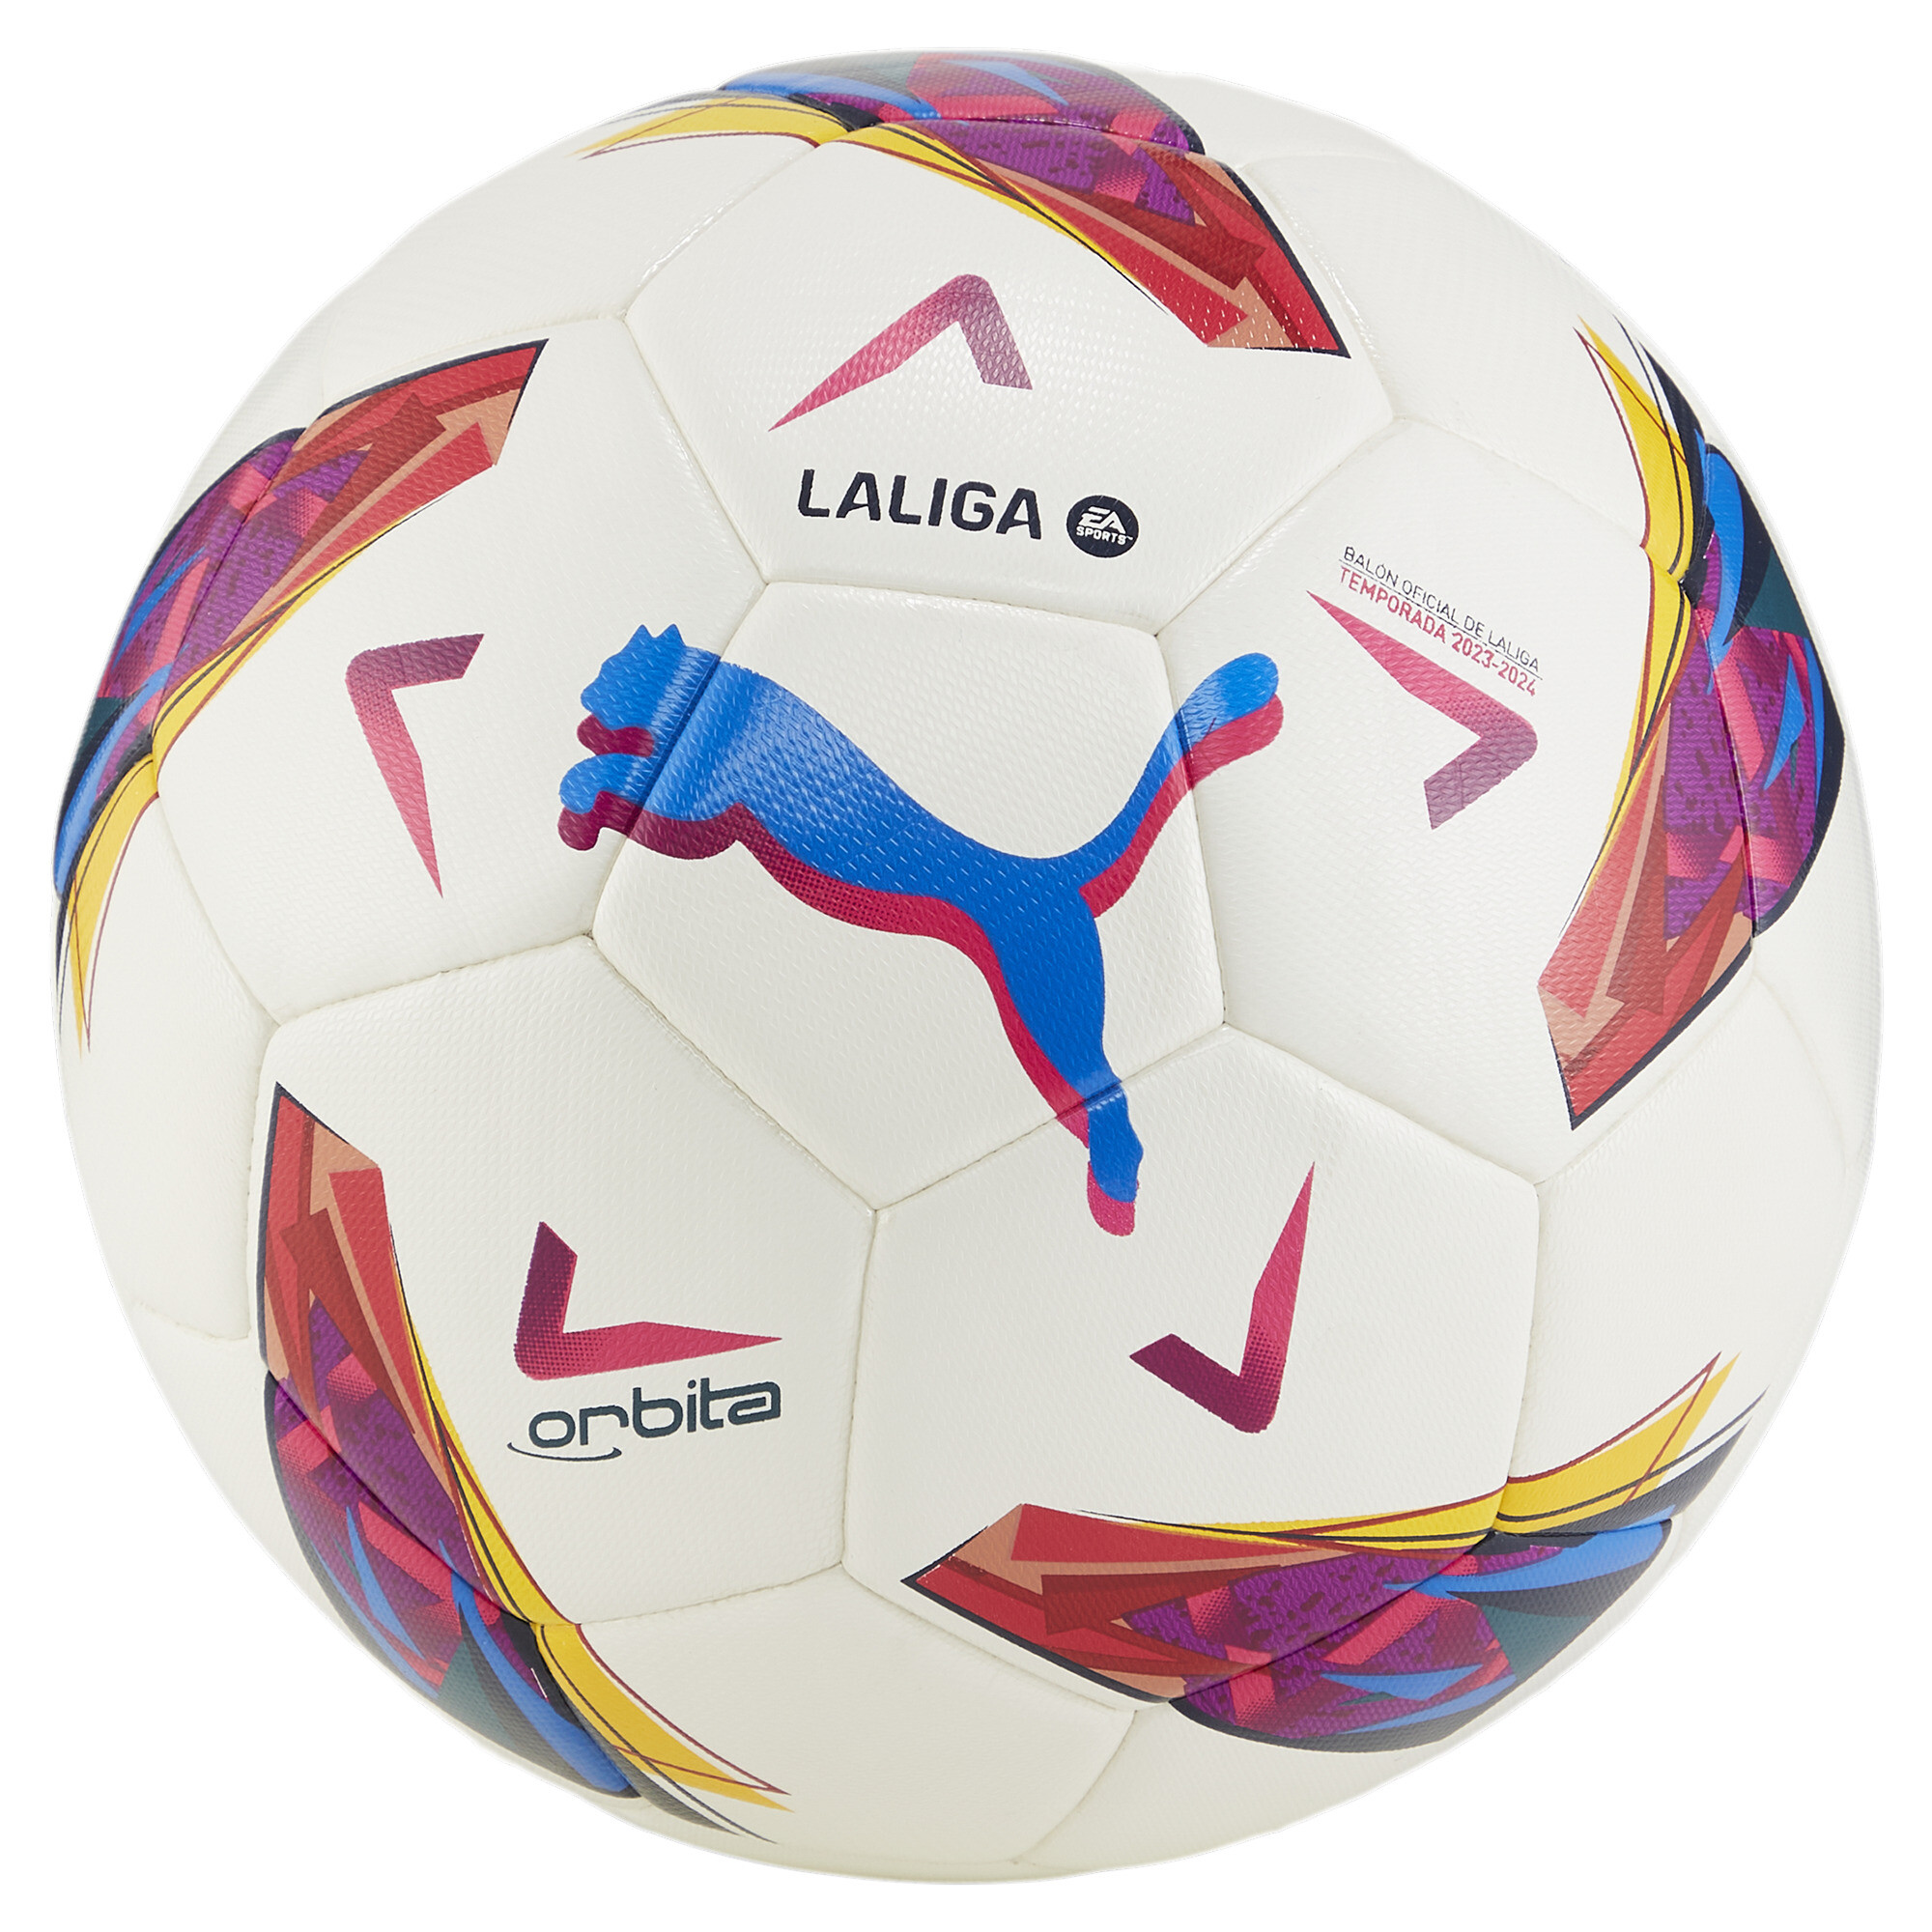 Puma Orbita La Liga Hybrid Training Football, White, Size 5, Accessories